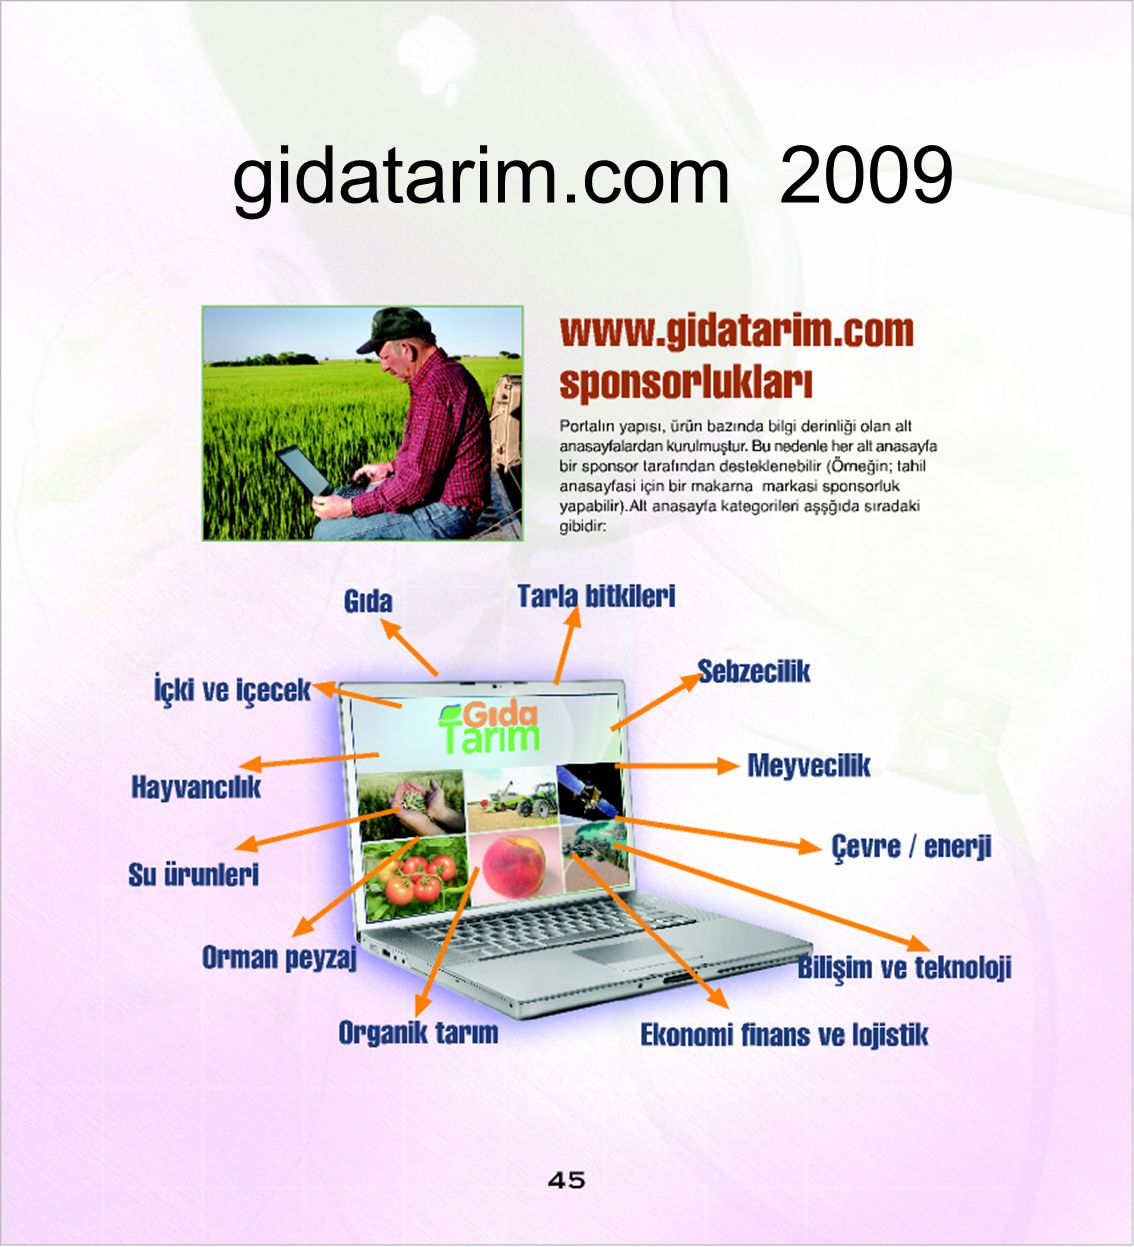 gidatarim.com 2009